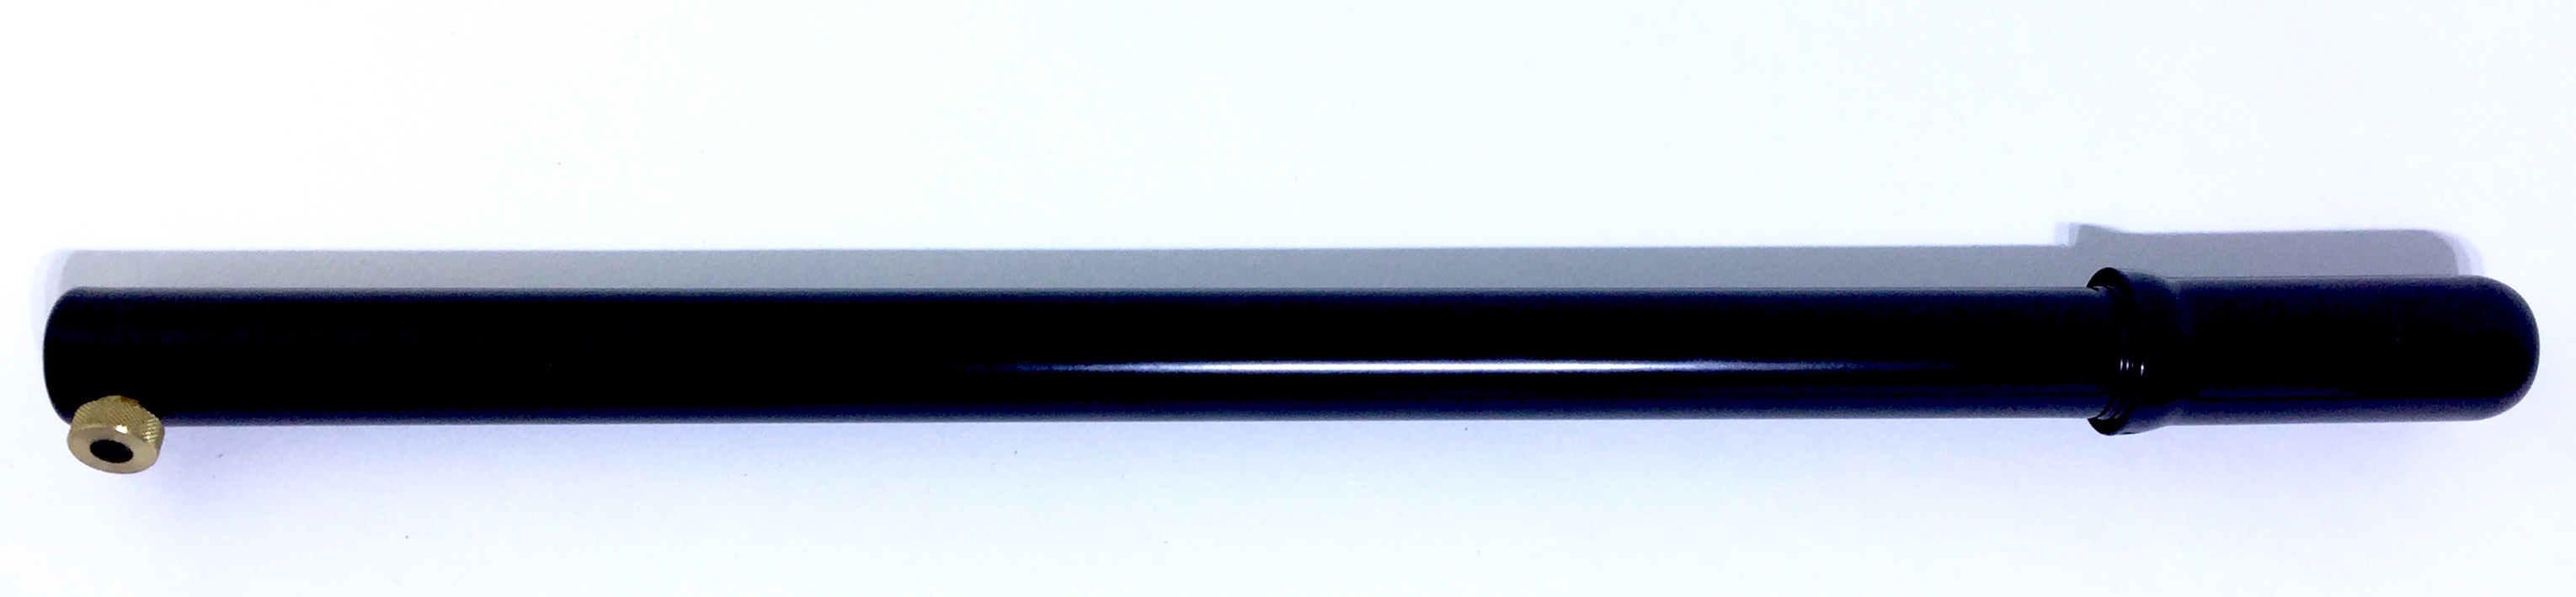 Luftpumpe, Metall schwarz 40 cm